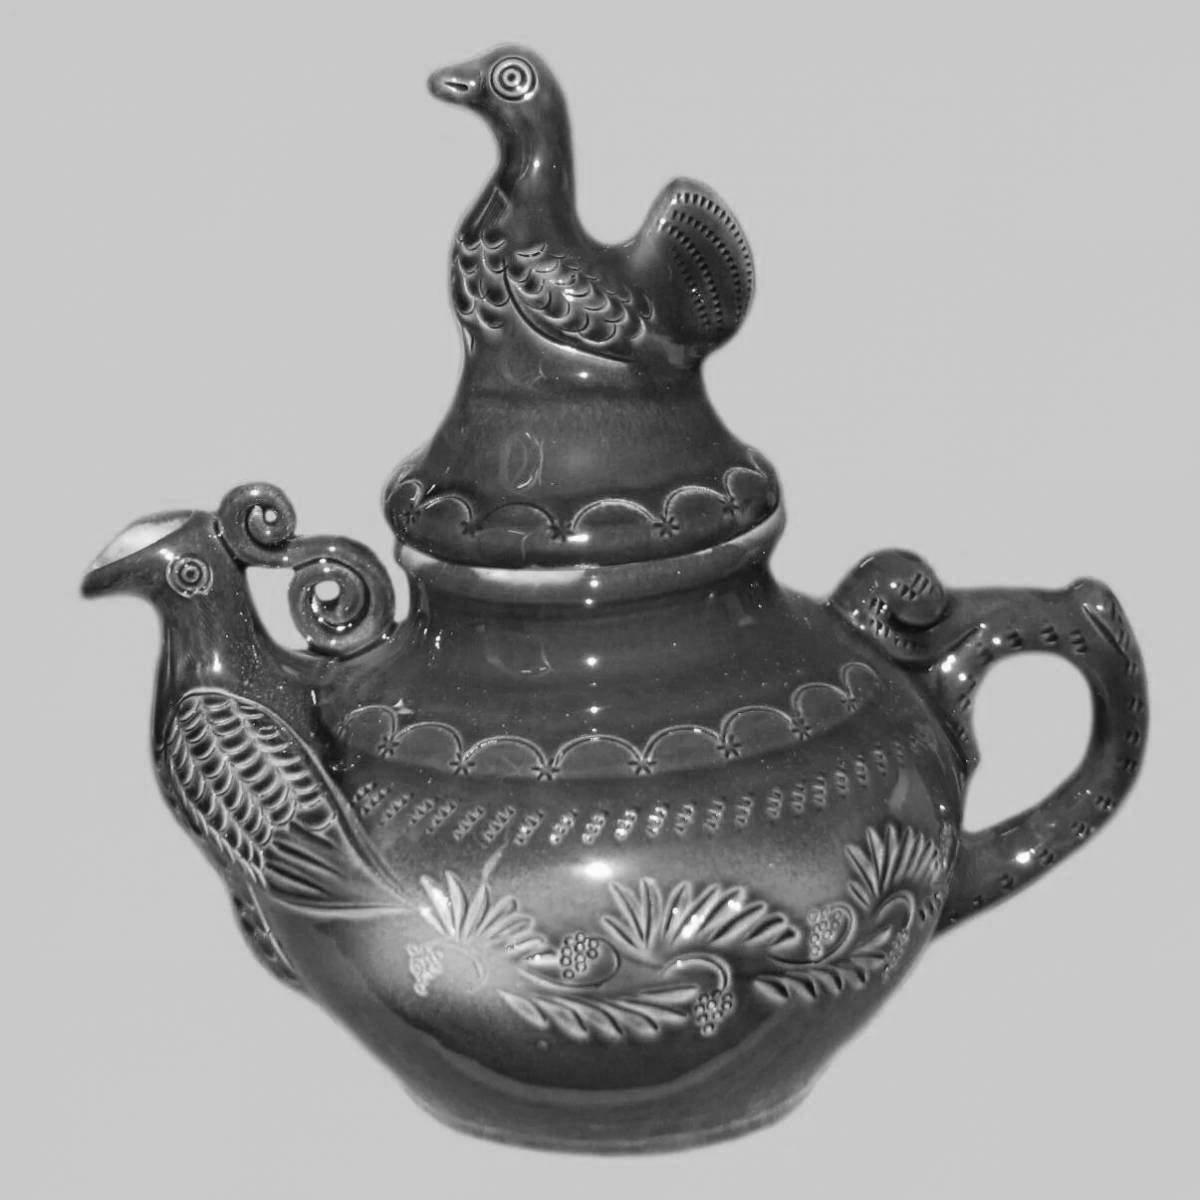 Beautiful Skopin ceramics grade 3